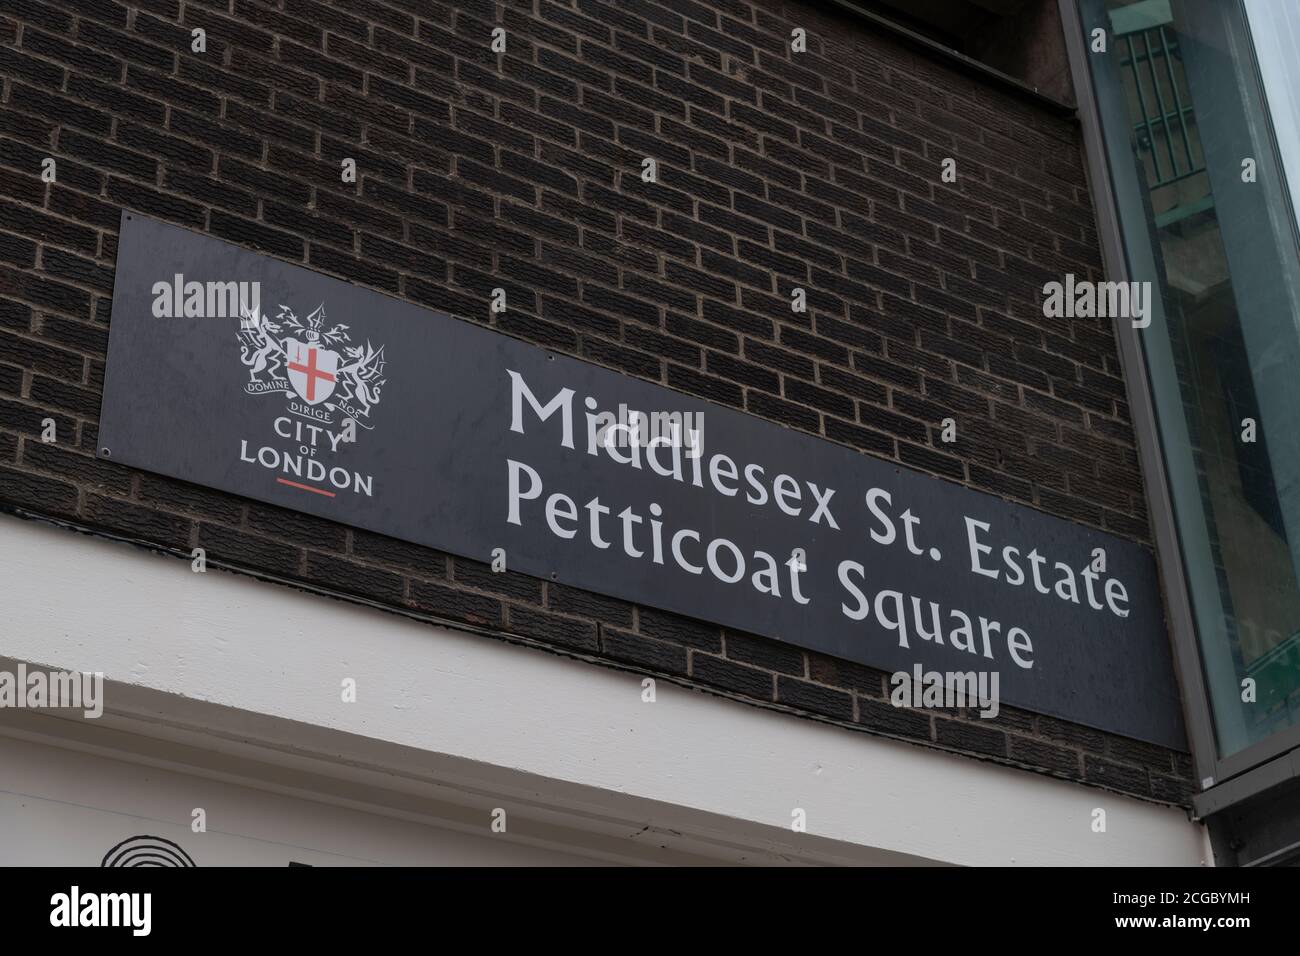 Señal para Middlesex St. Estate, Petticoat Square Foto de stock